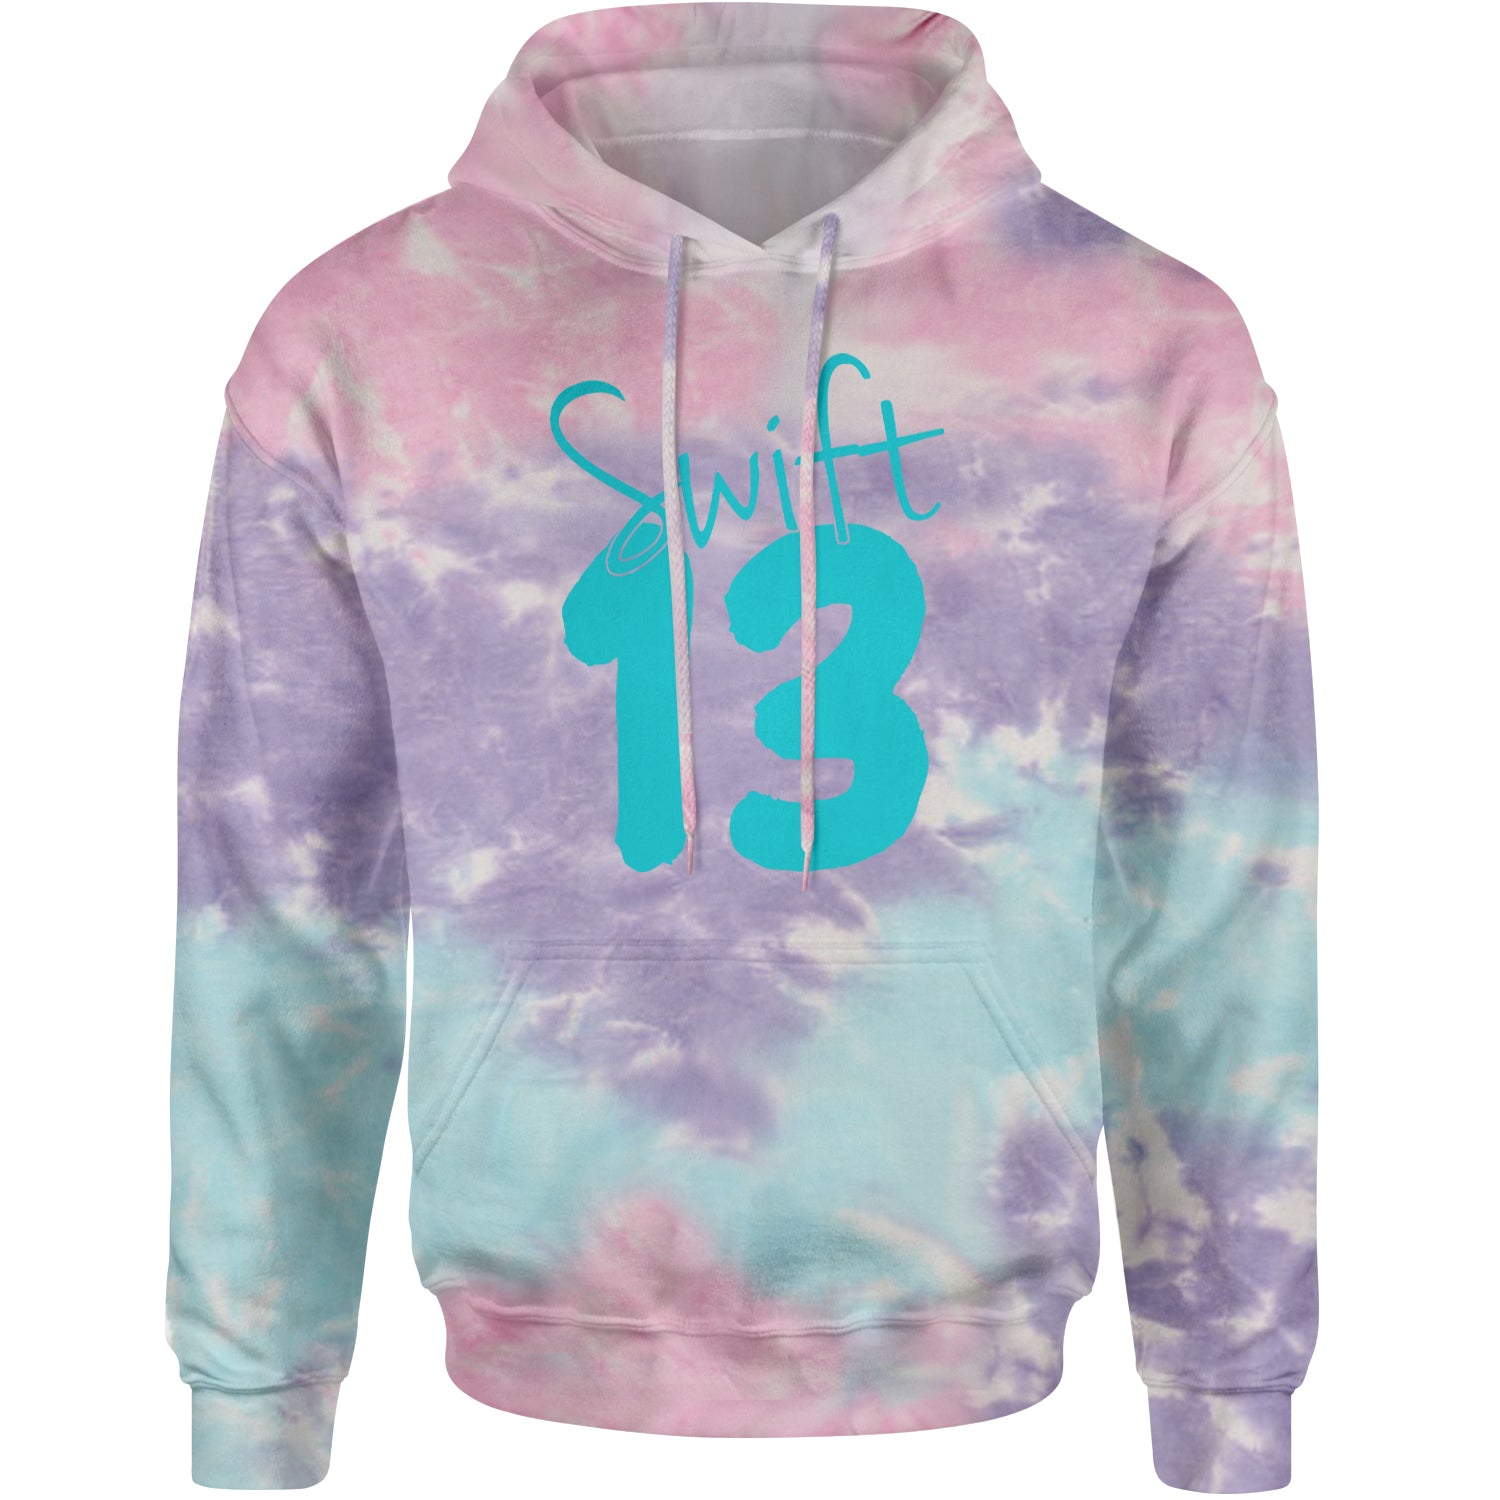 13 Swift 13 Lucky Number Era TTPD Adult Hoodie Sweatshirt Cotton Candy